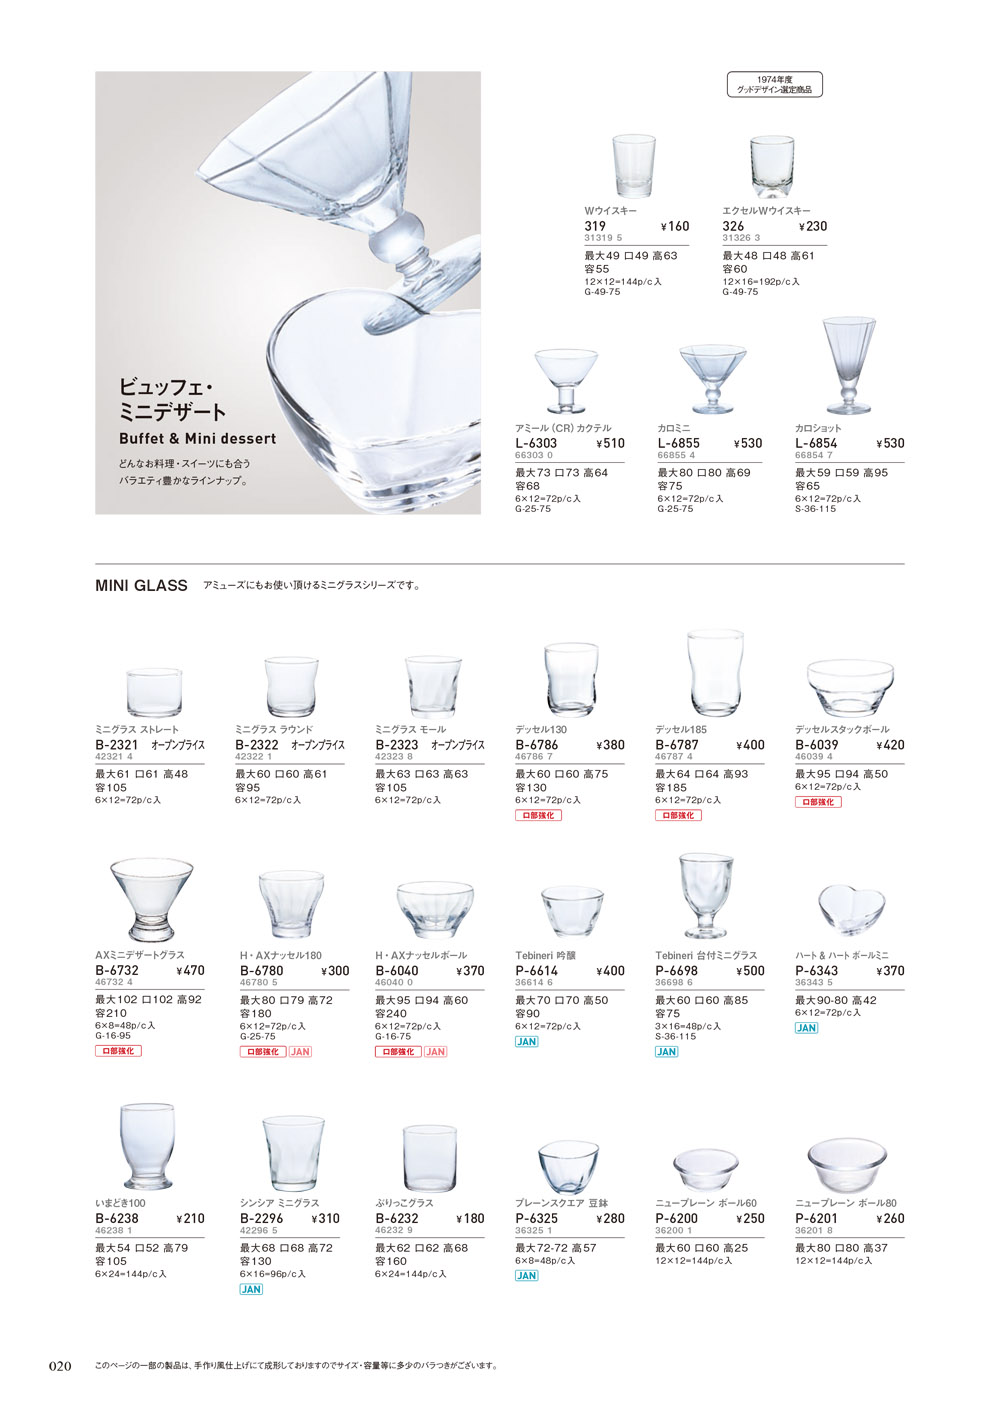 ADERIA Glassware Catalogue 2019 P.20 | 食器カタログ.com